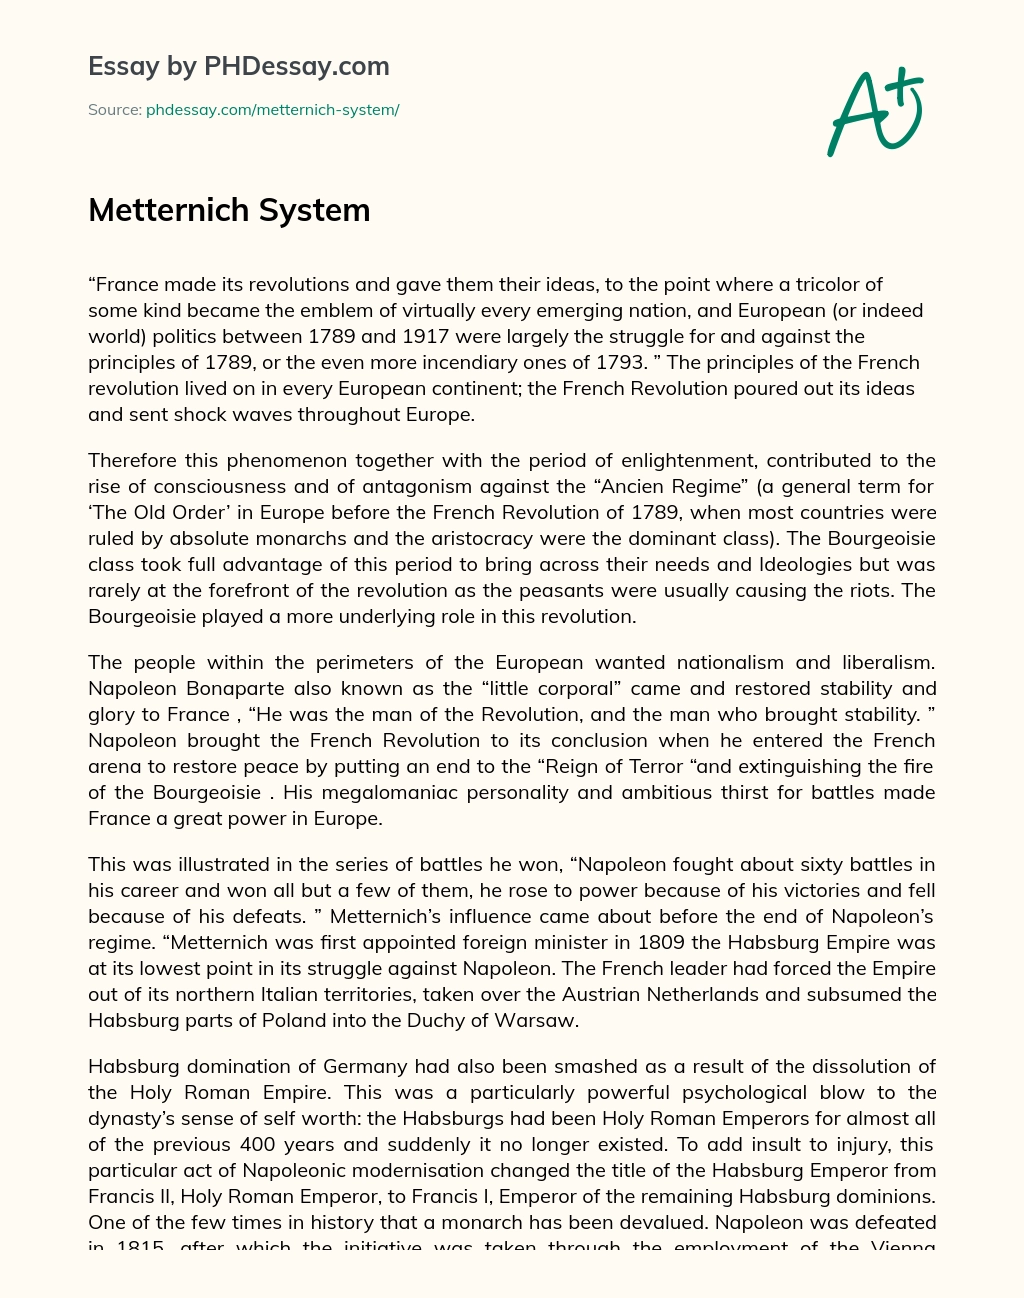 Metternich System essay